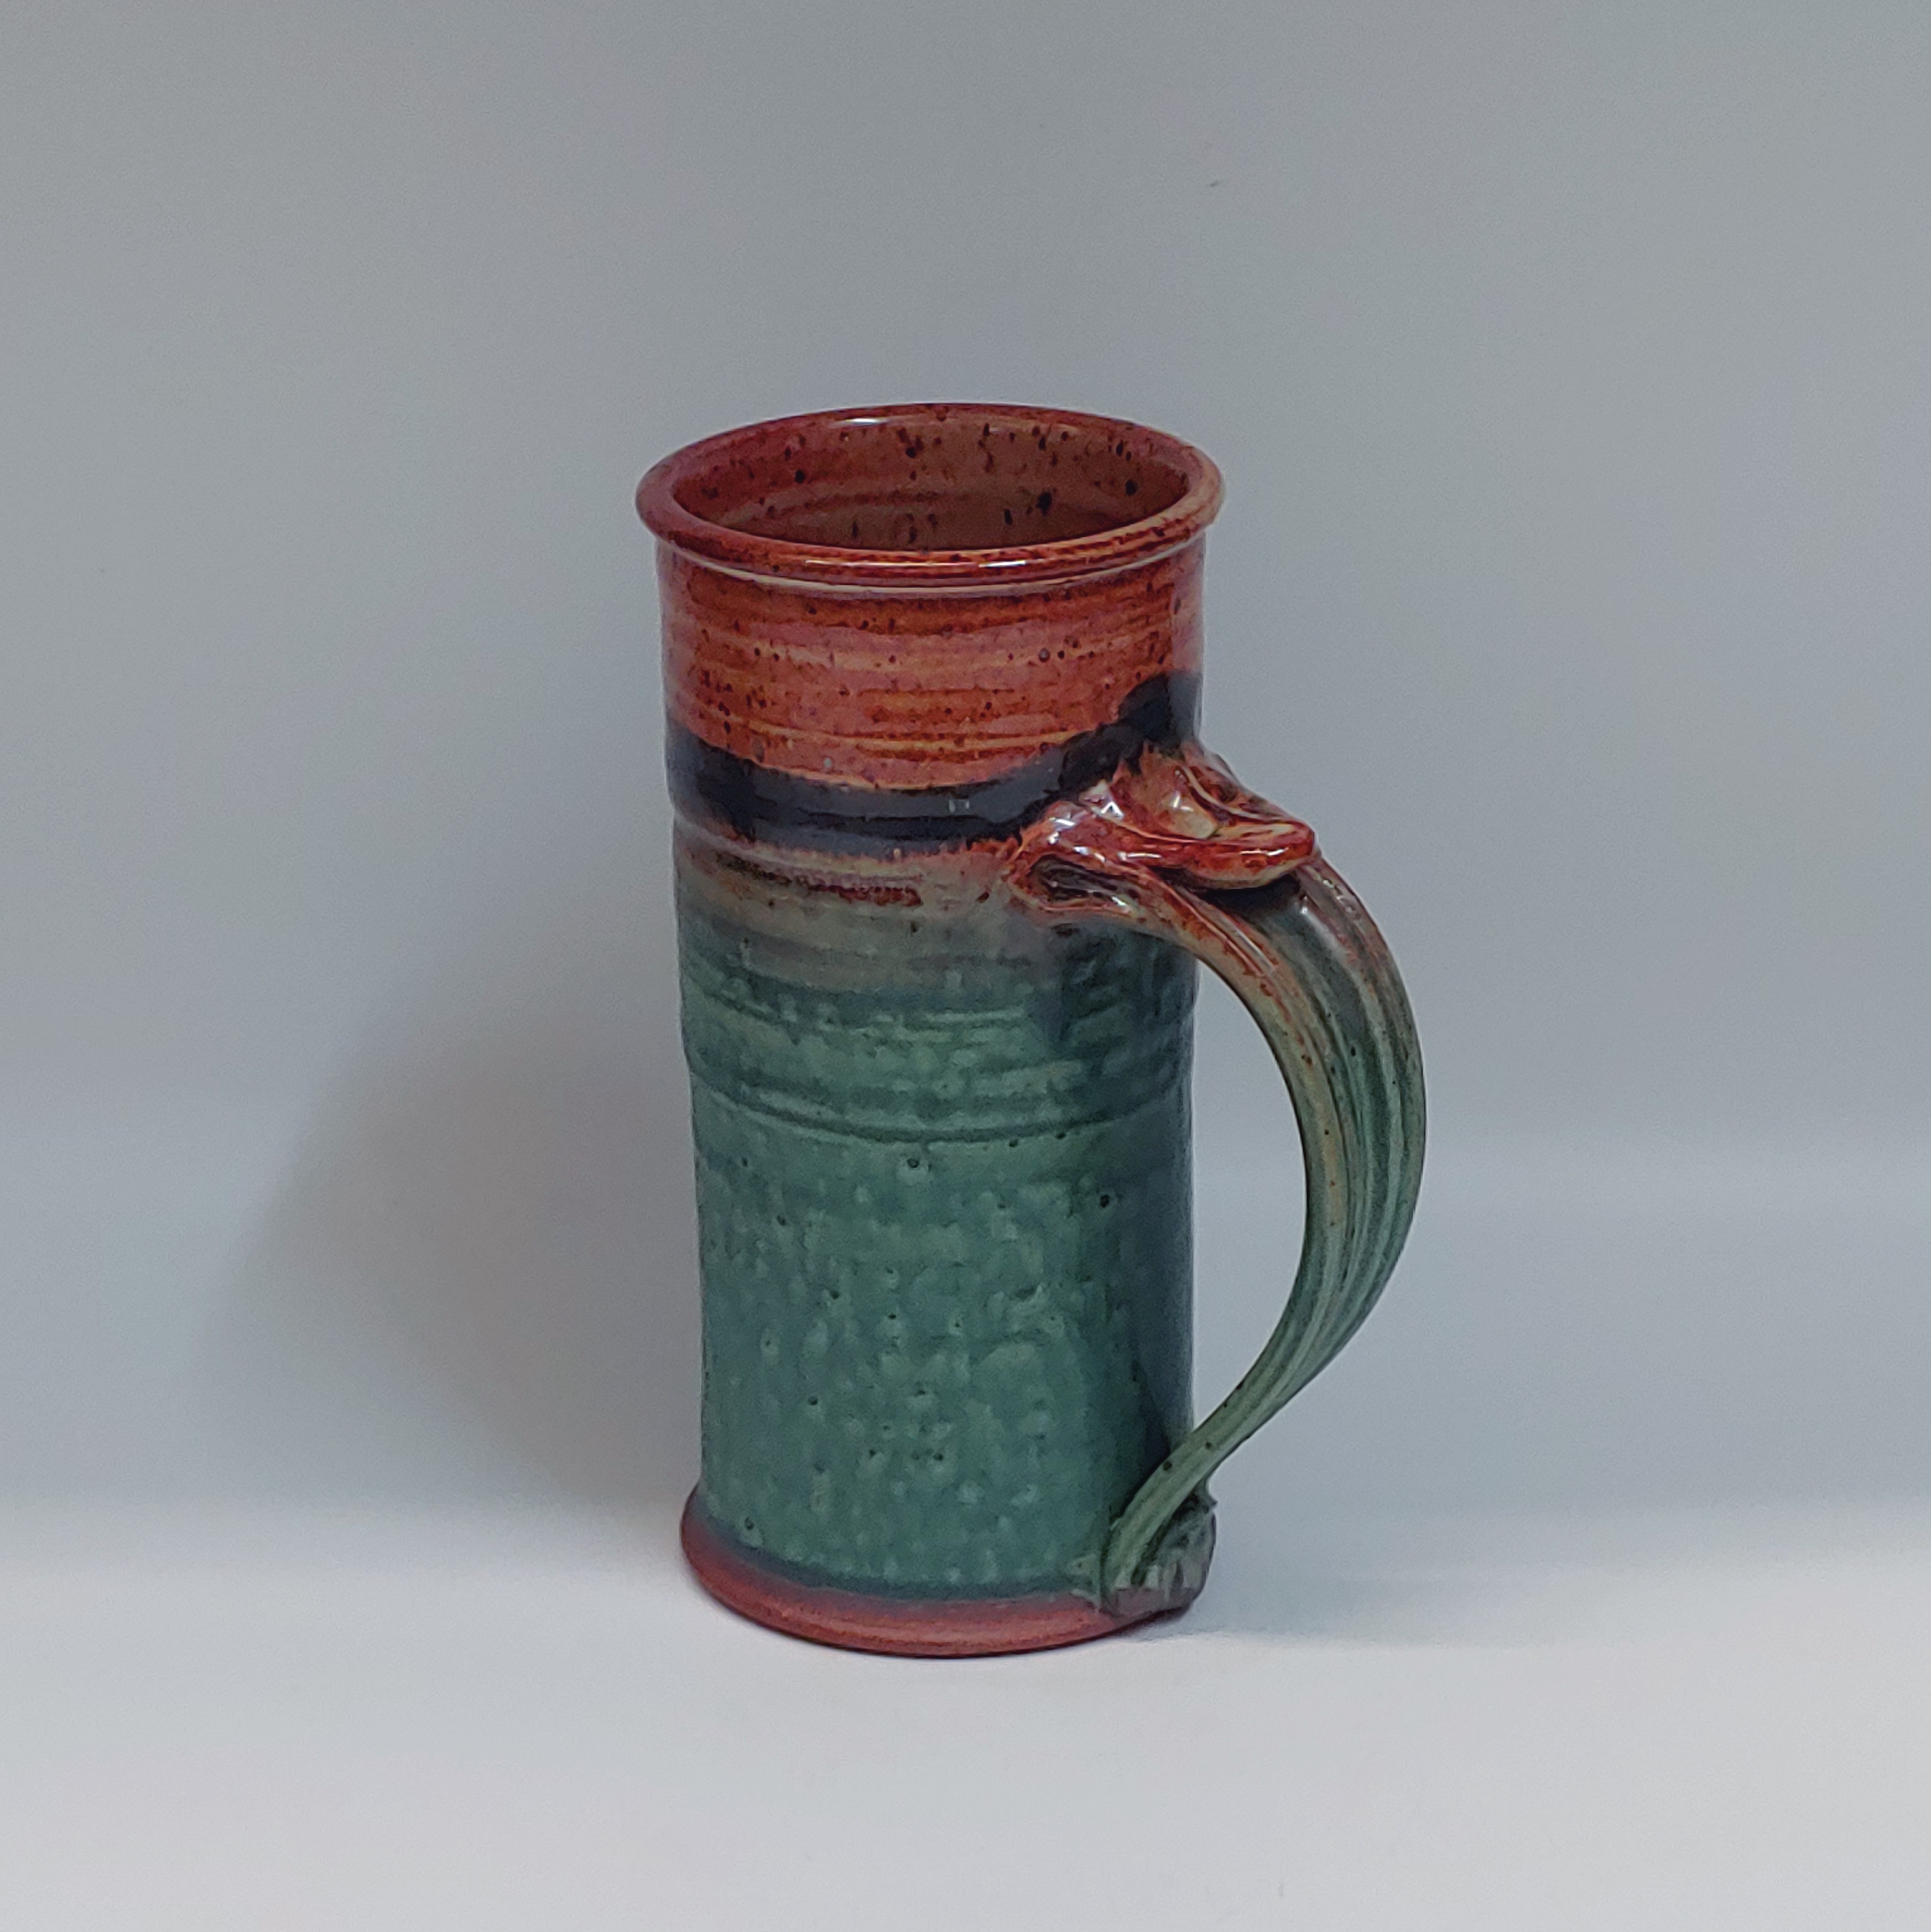 #220243 Mug, Beer Stein, Green/Tan with Black Stripe $22 at Hunter Wolff Gallery